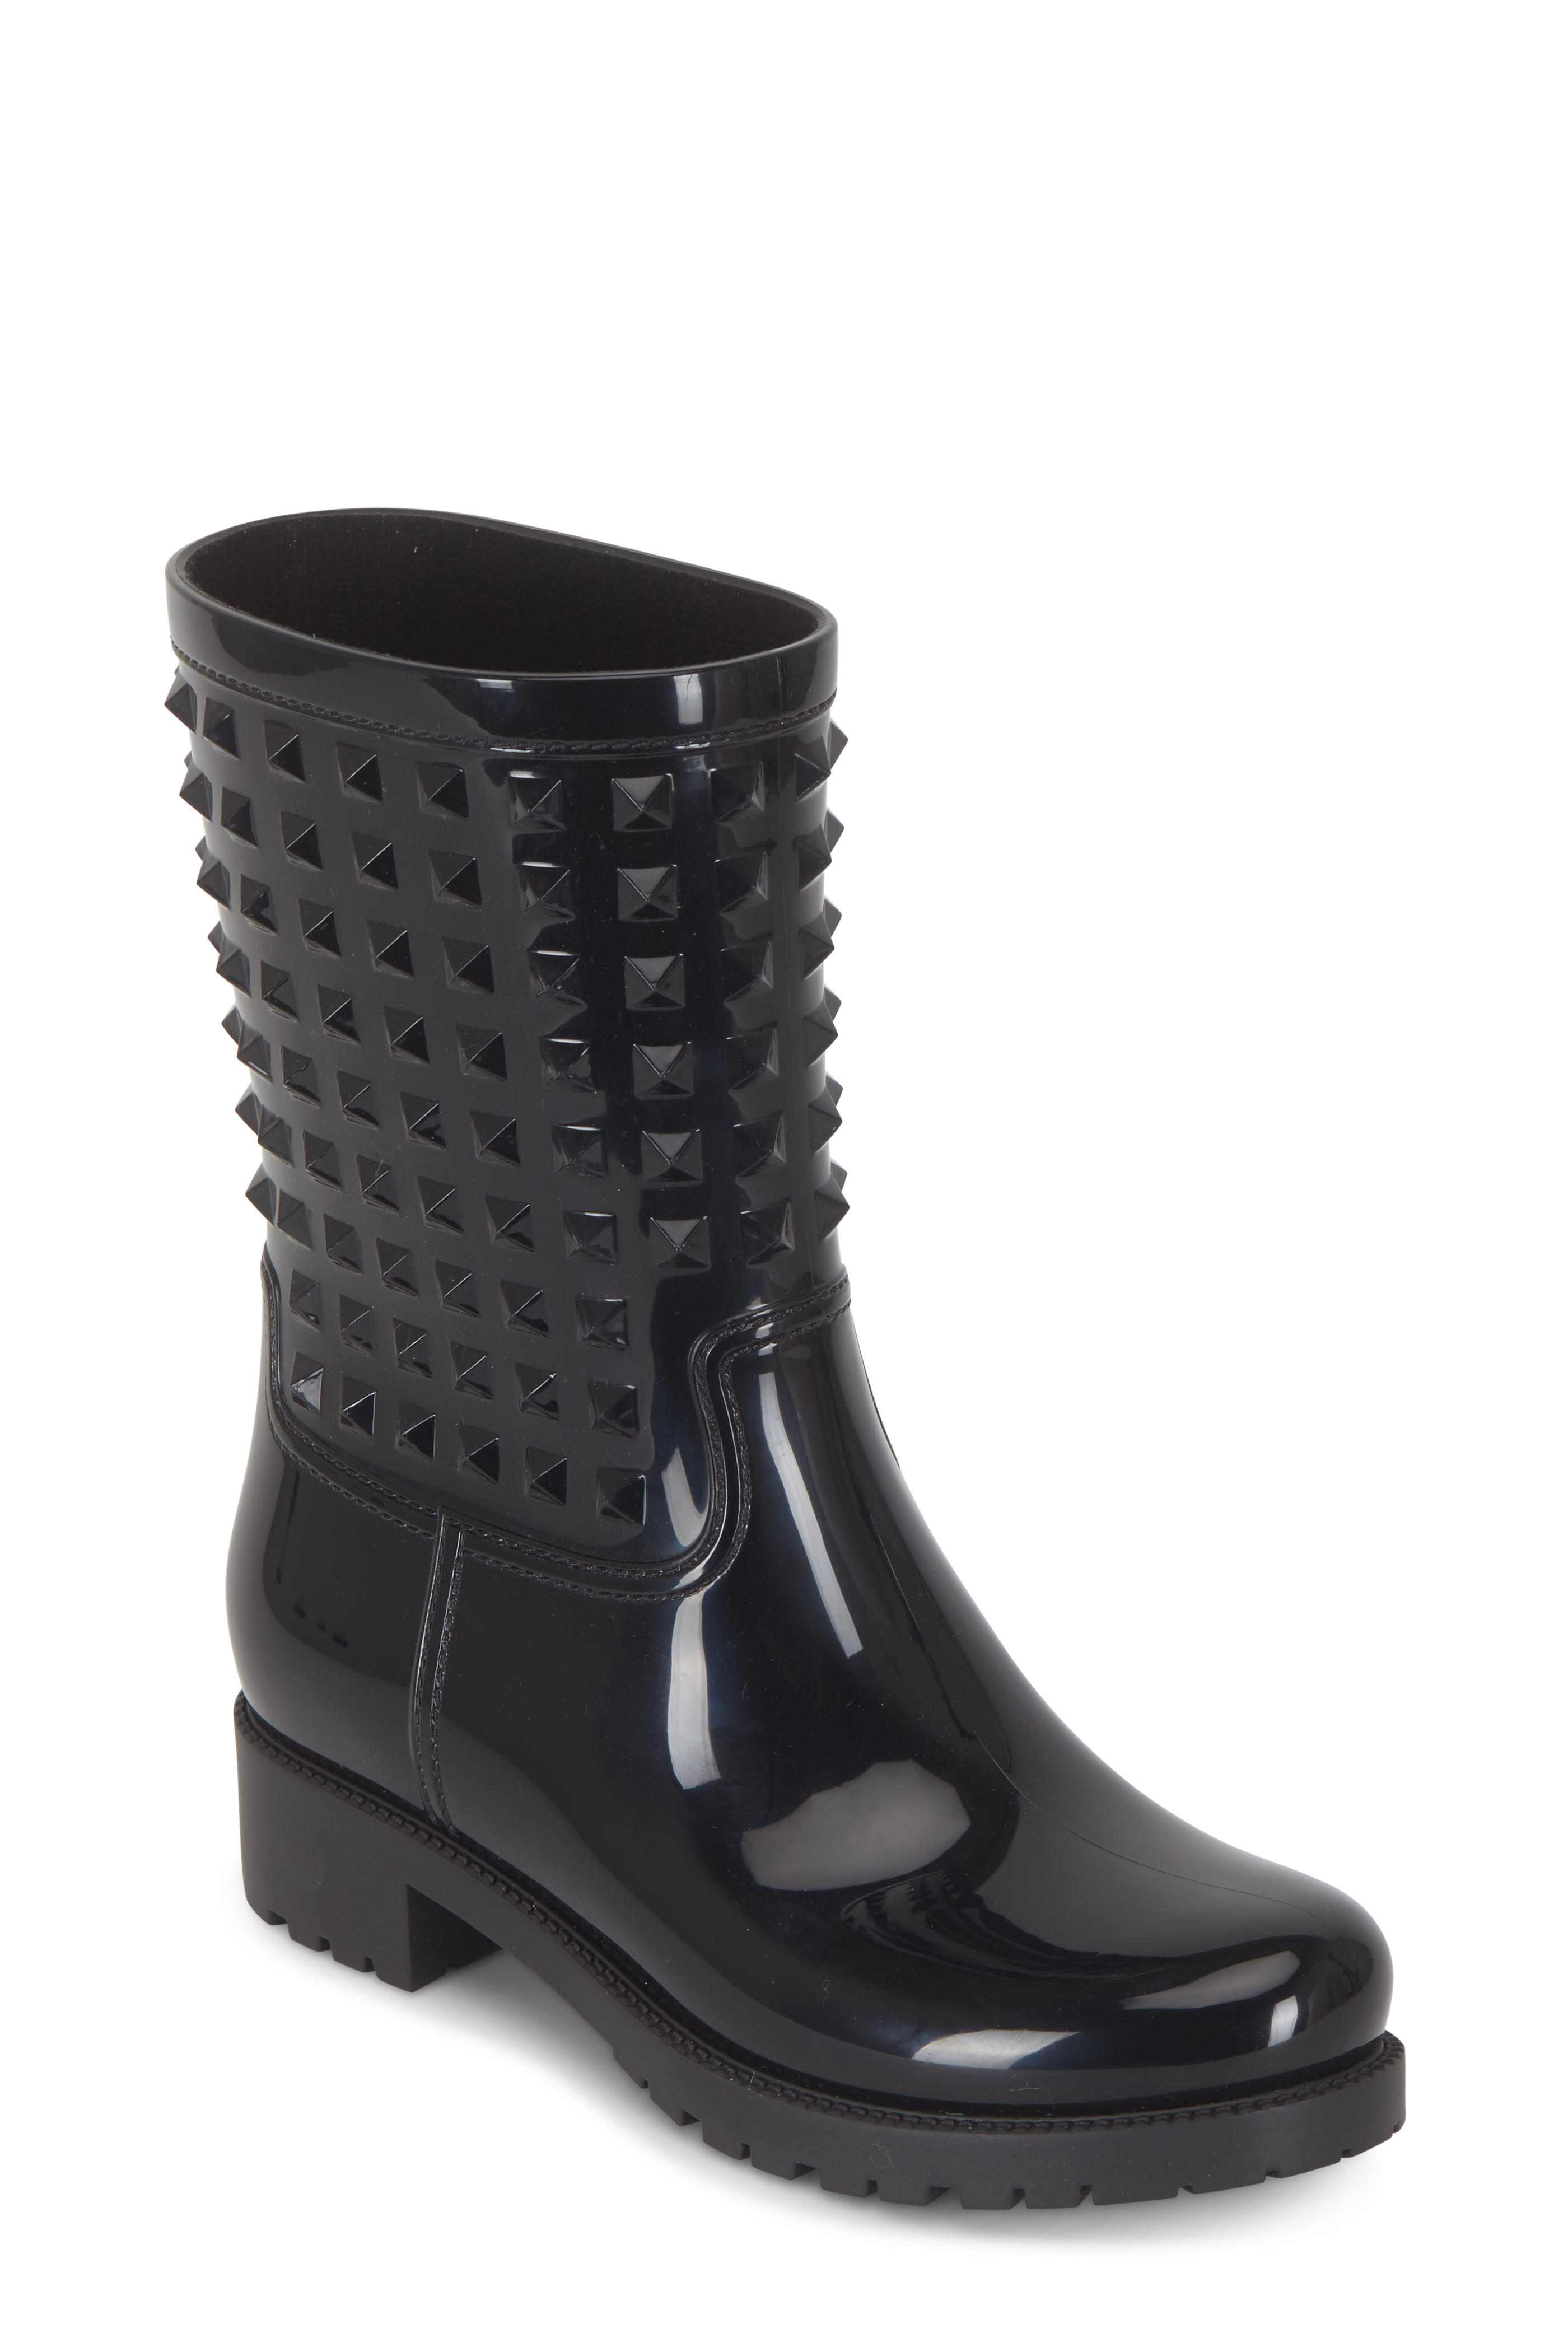 valentino rain boots